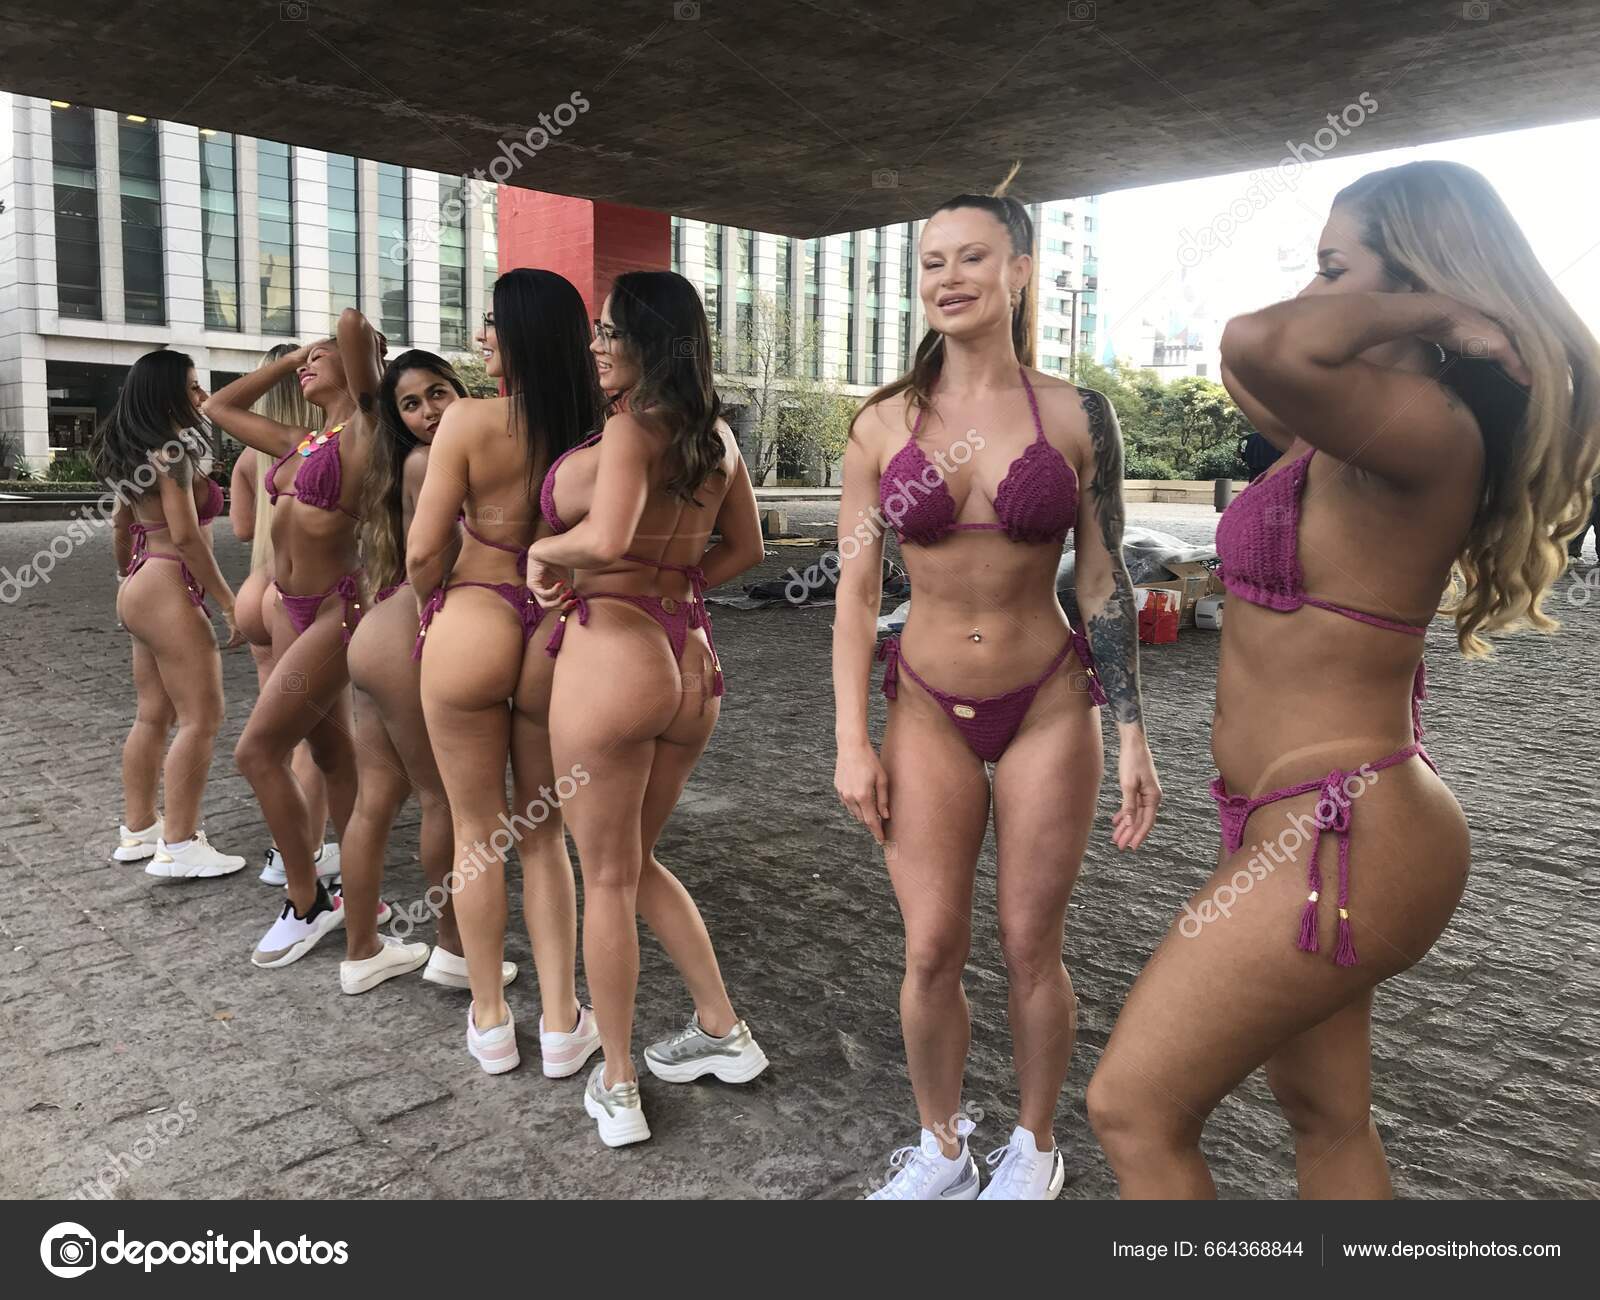 Candidates of Brazilian Miss BumBum in Bikini - People's Daily Online